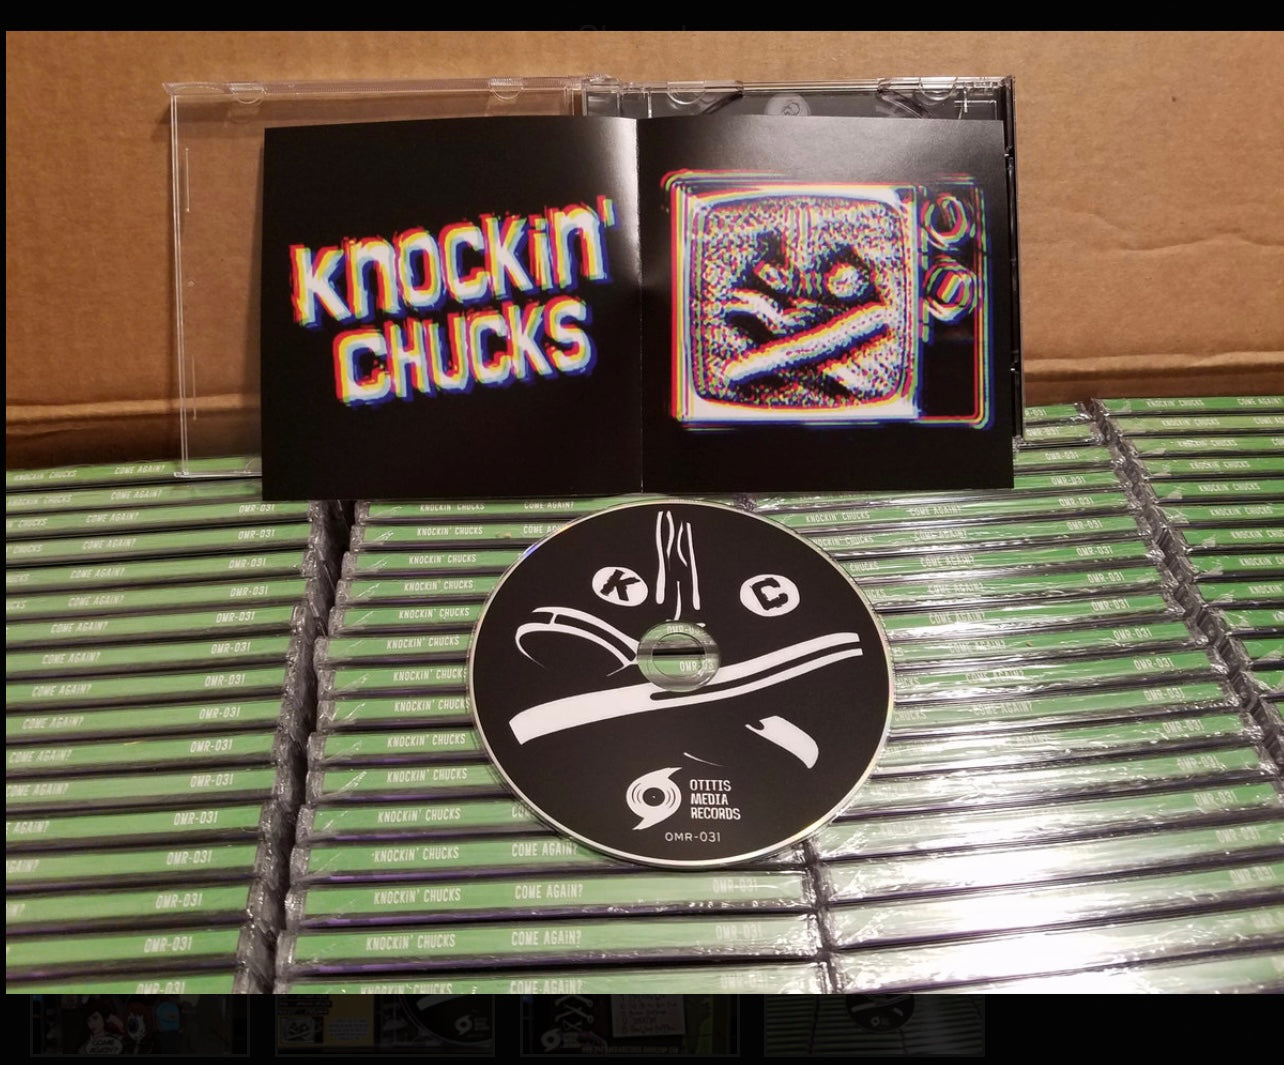 OMR-031 Knockin’ Chucks “Come Again?!” CD